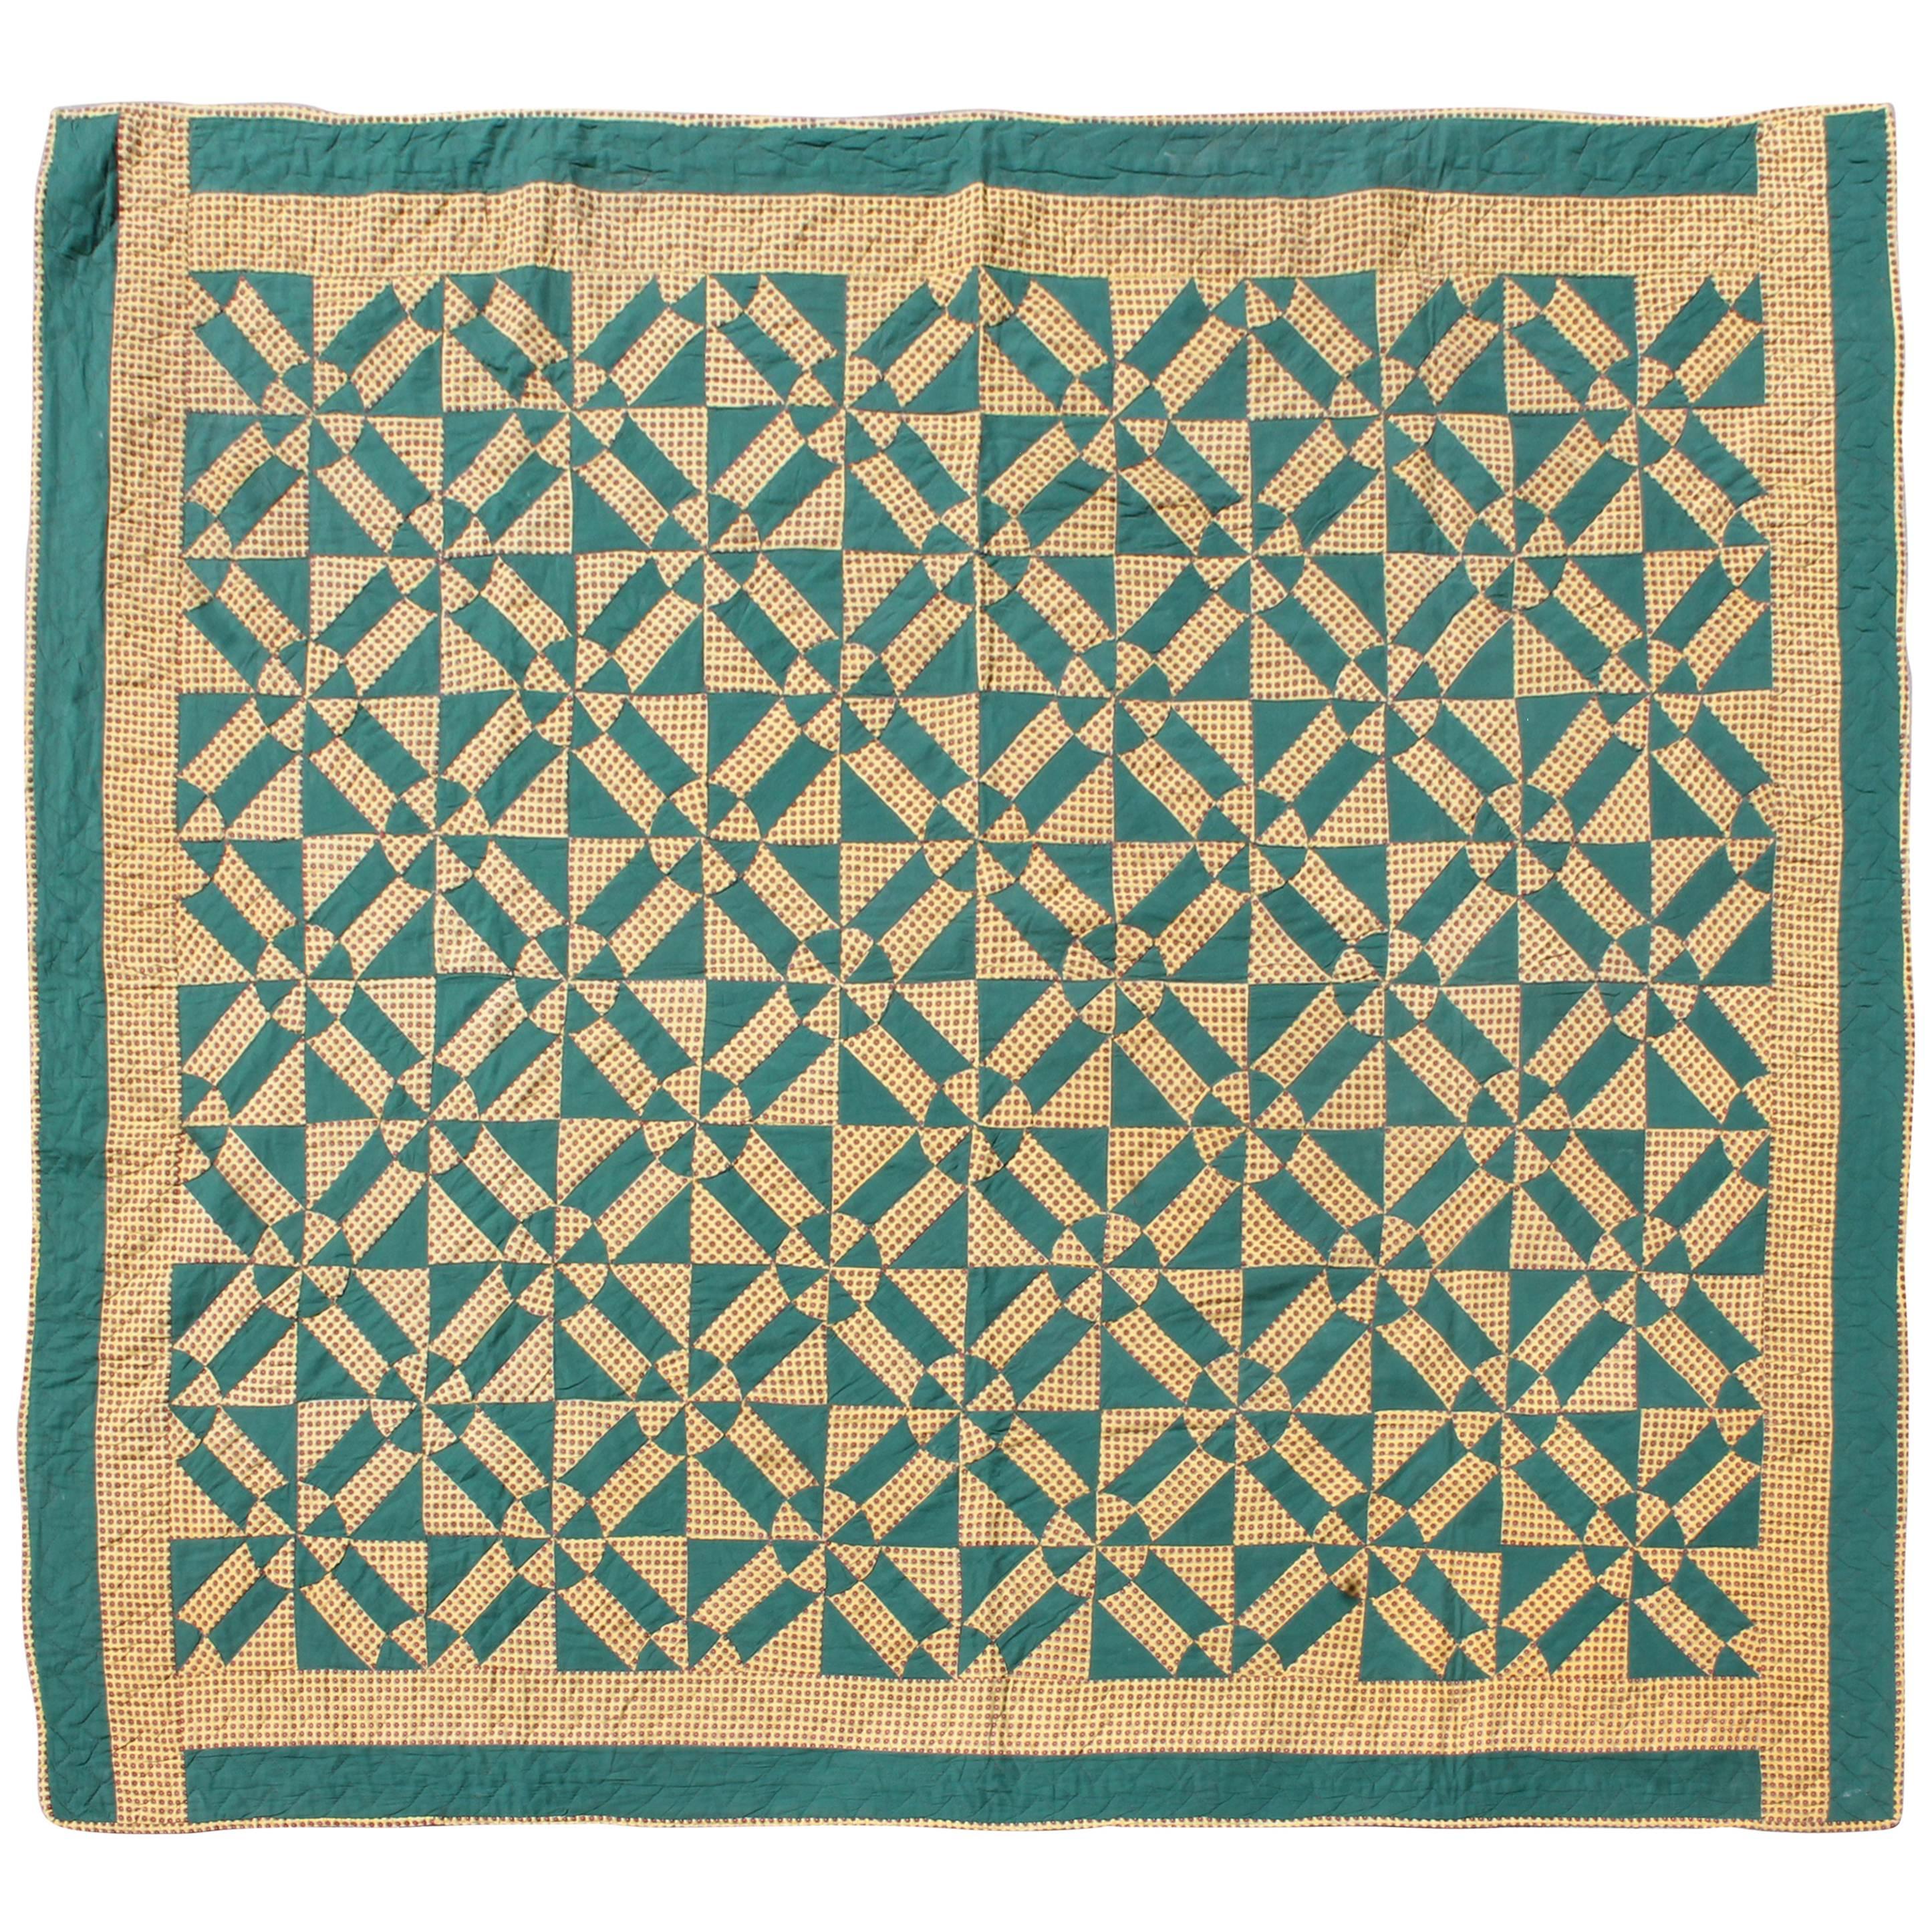 19th Century, Geometric Pinwheels Green and Tan Quilt